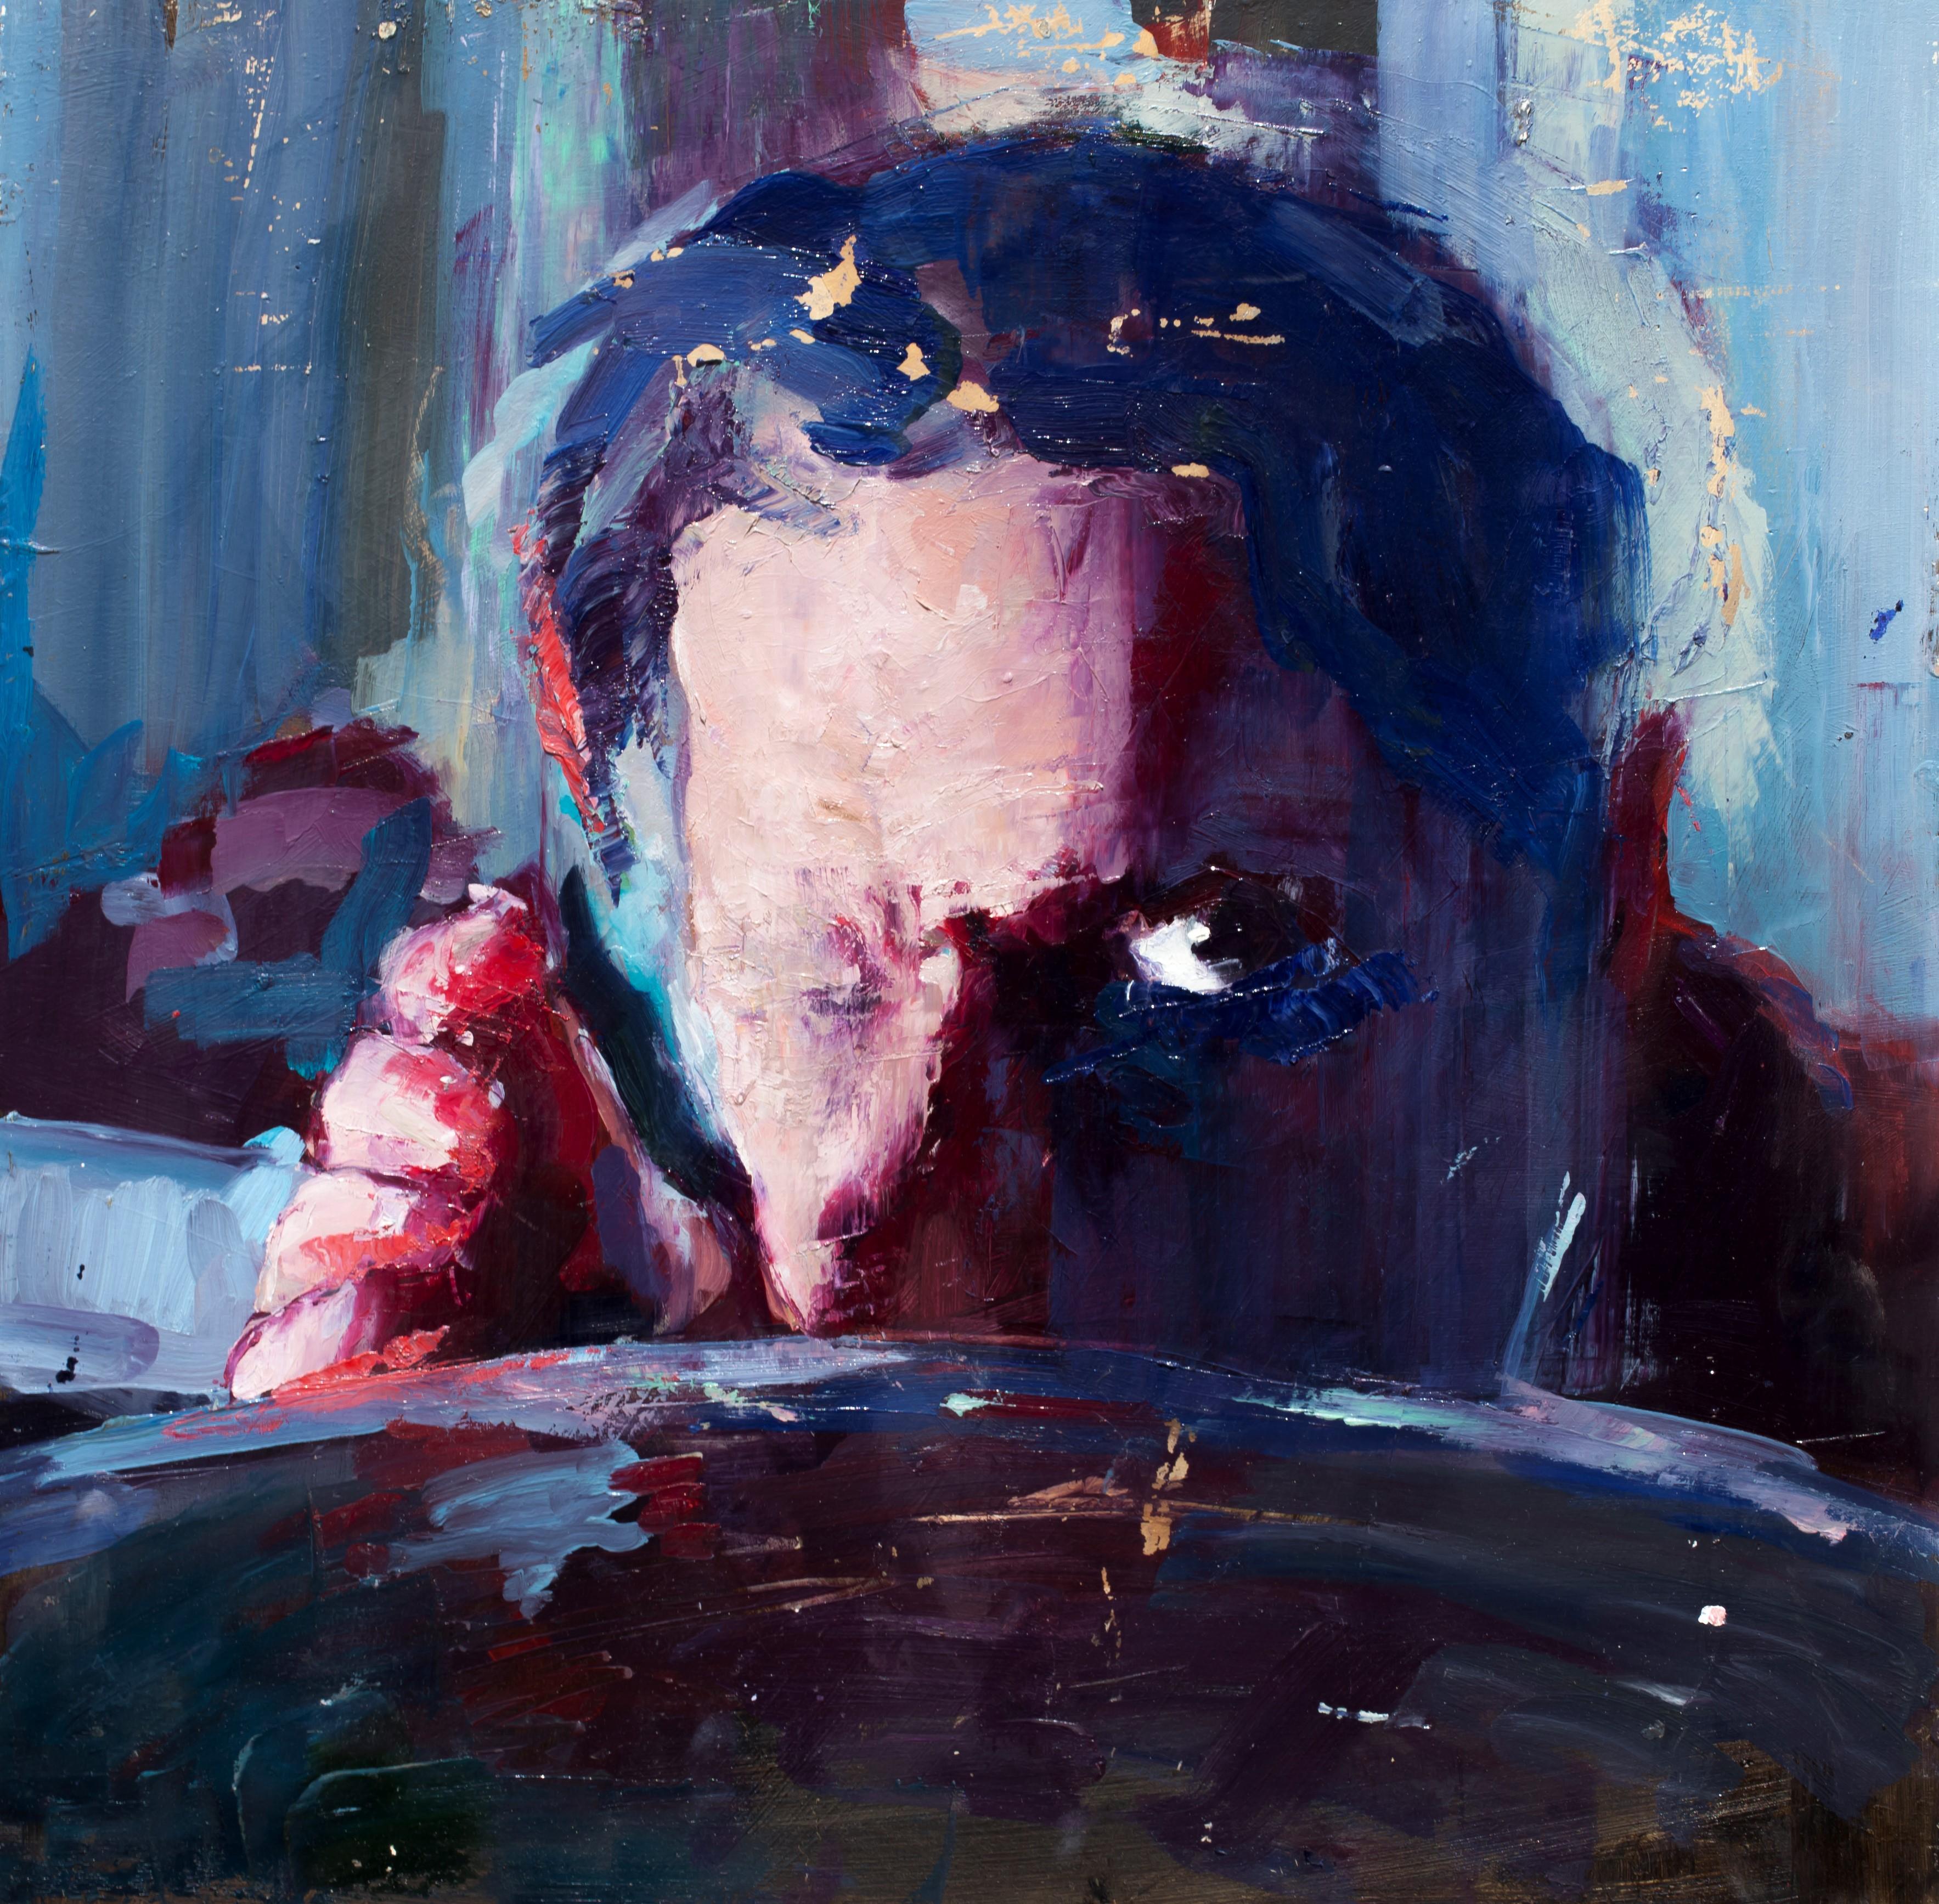 Rabid - Cinema Inspired One Eyed Male Figure, Oil Painting on Panel